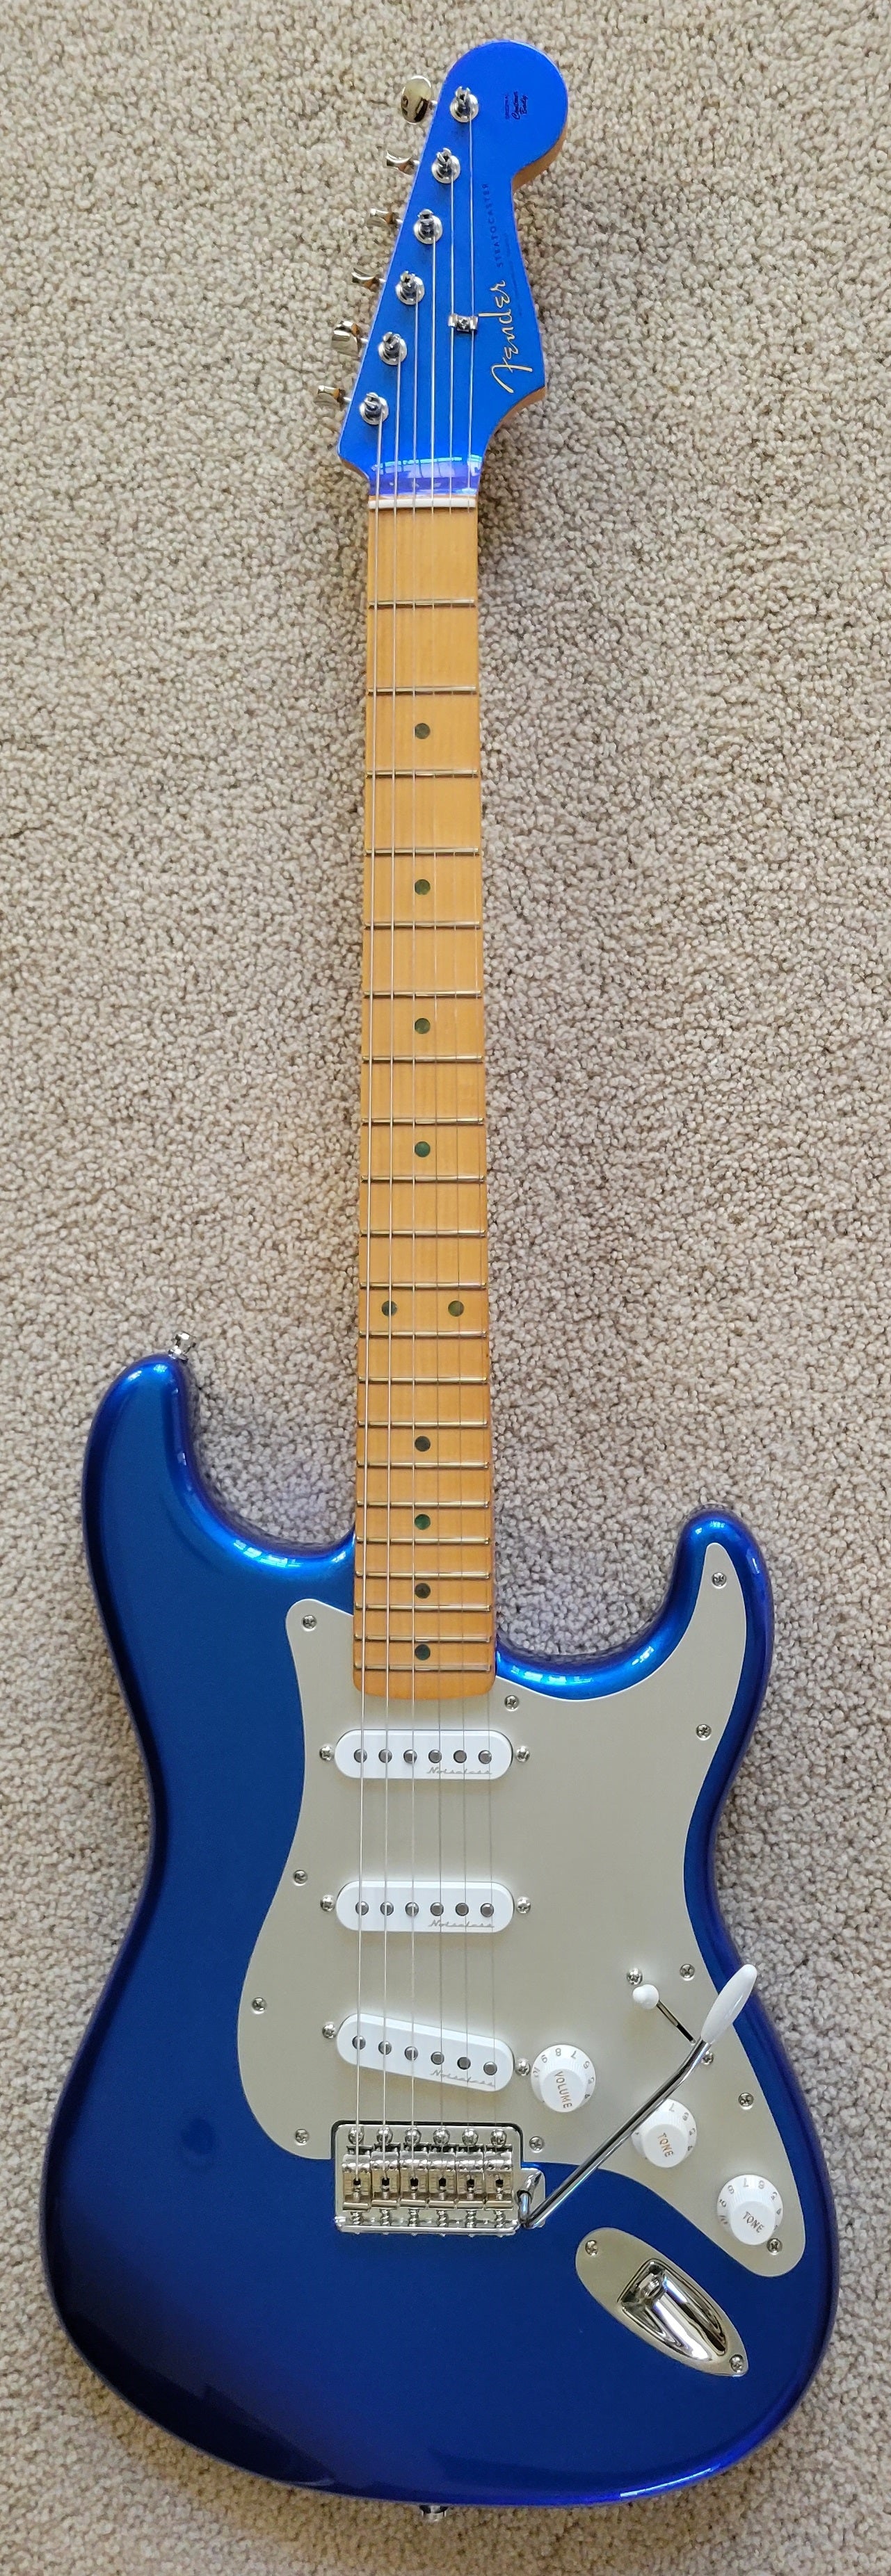 Fender Limited Edition H.E.R. Stratocaster Electric Guitar, Blue Marlin, New Gig Bag